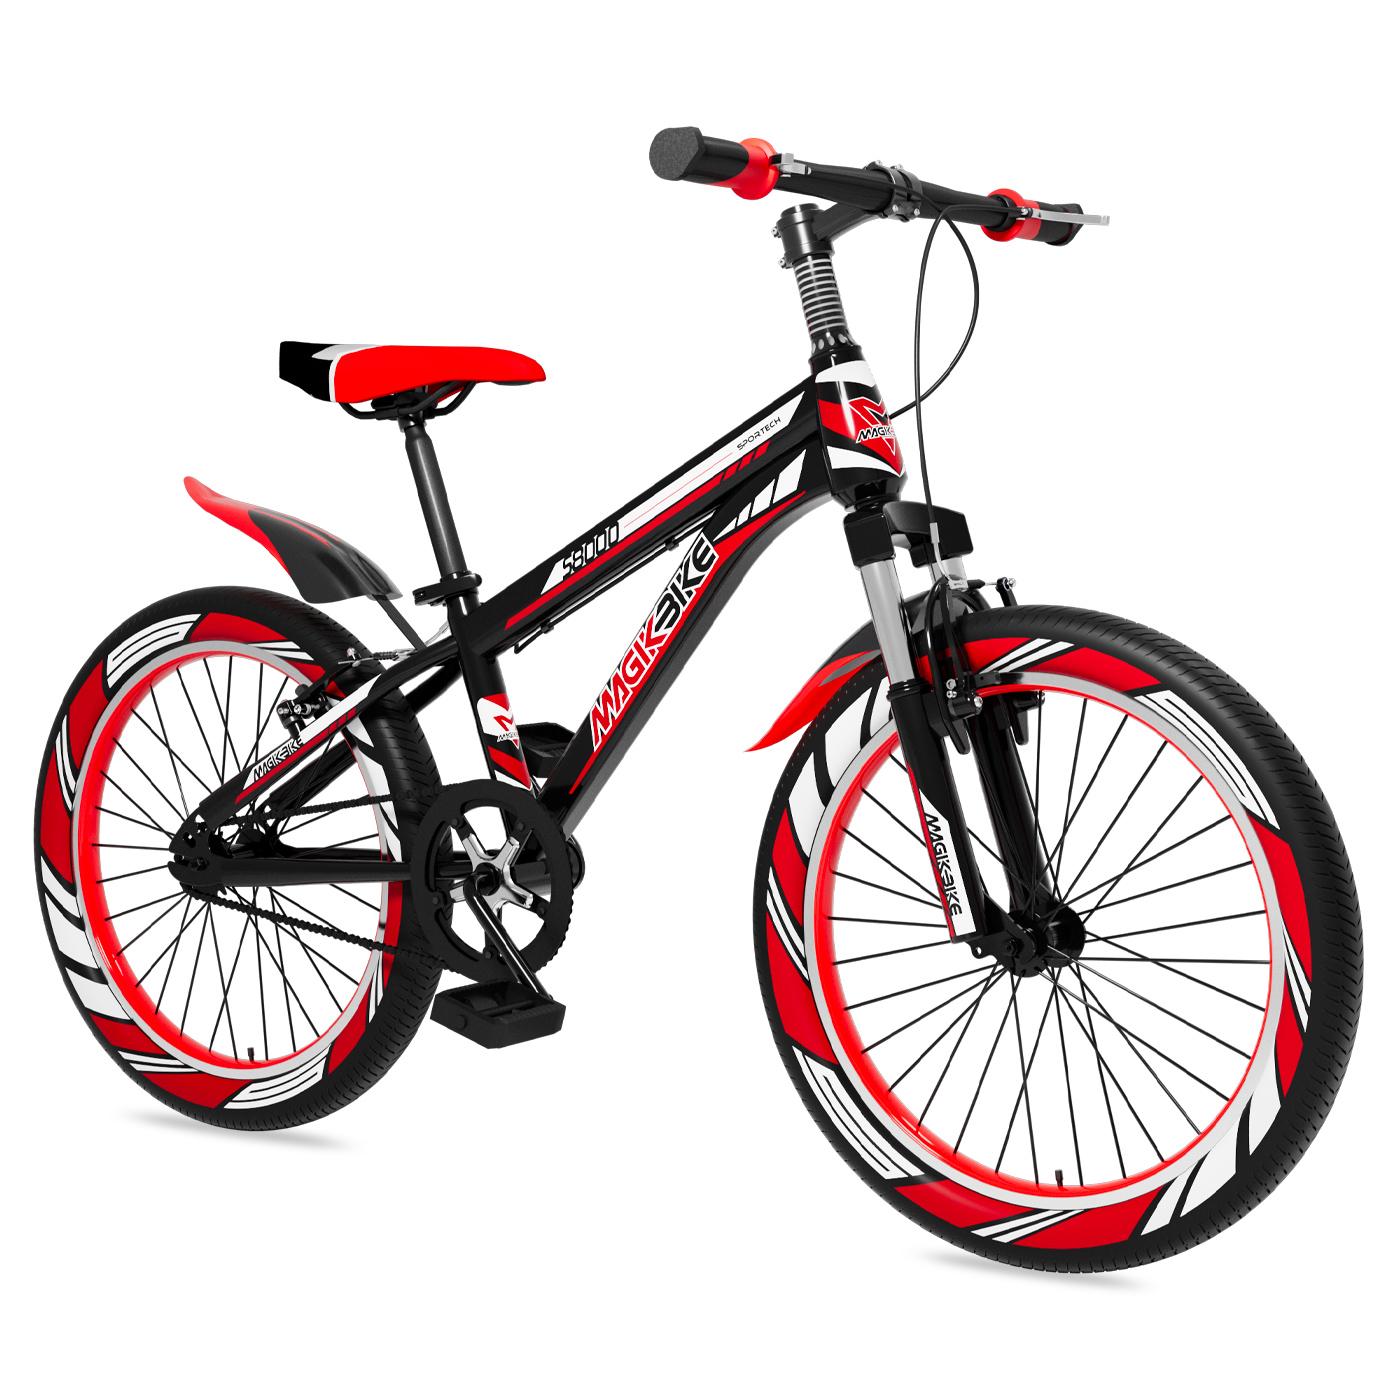 Bicicleta para niño roja medida 20